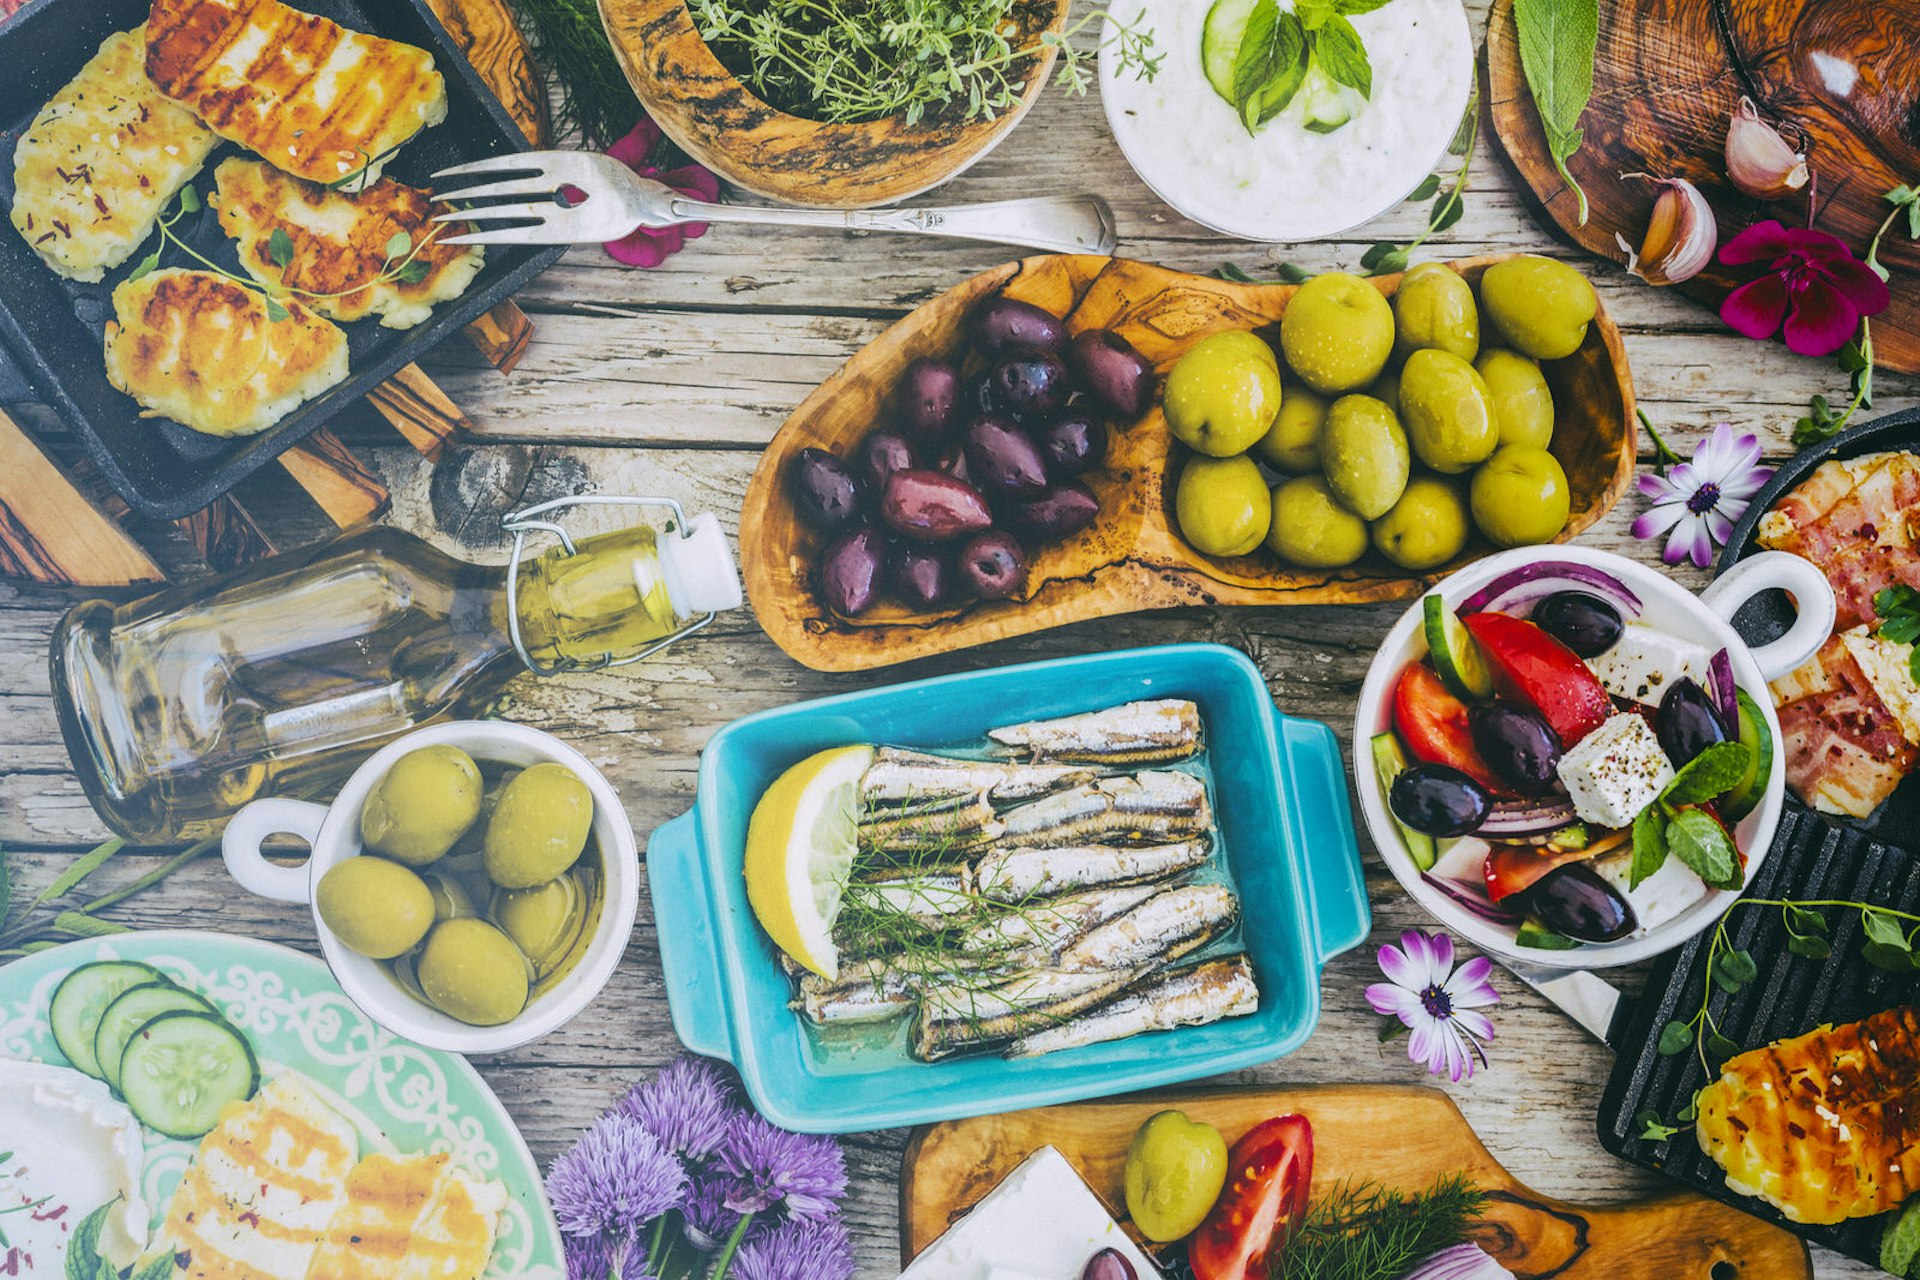 Greek cuisine with mandatory olives © gorillaimages / Shutterstock